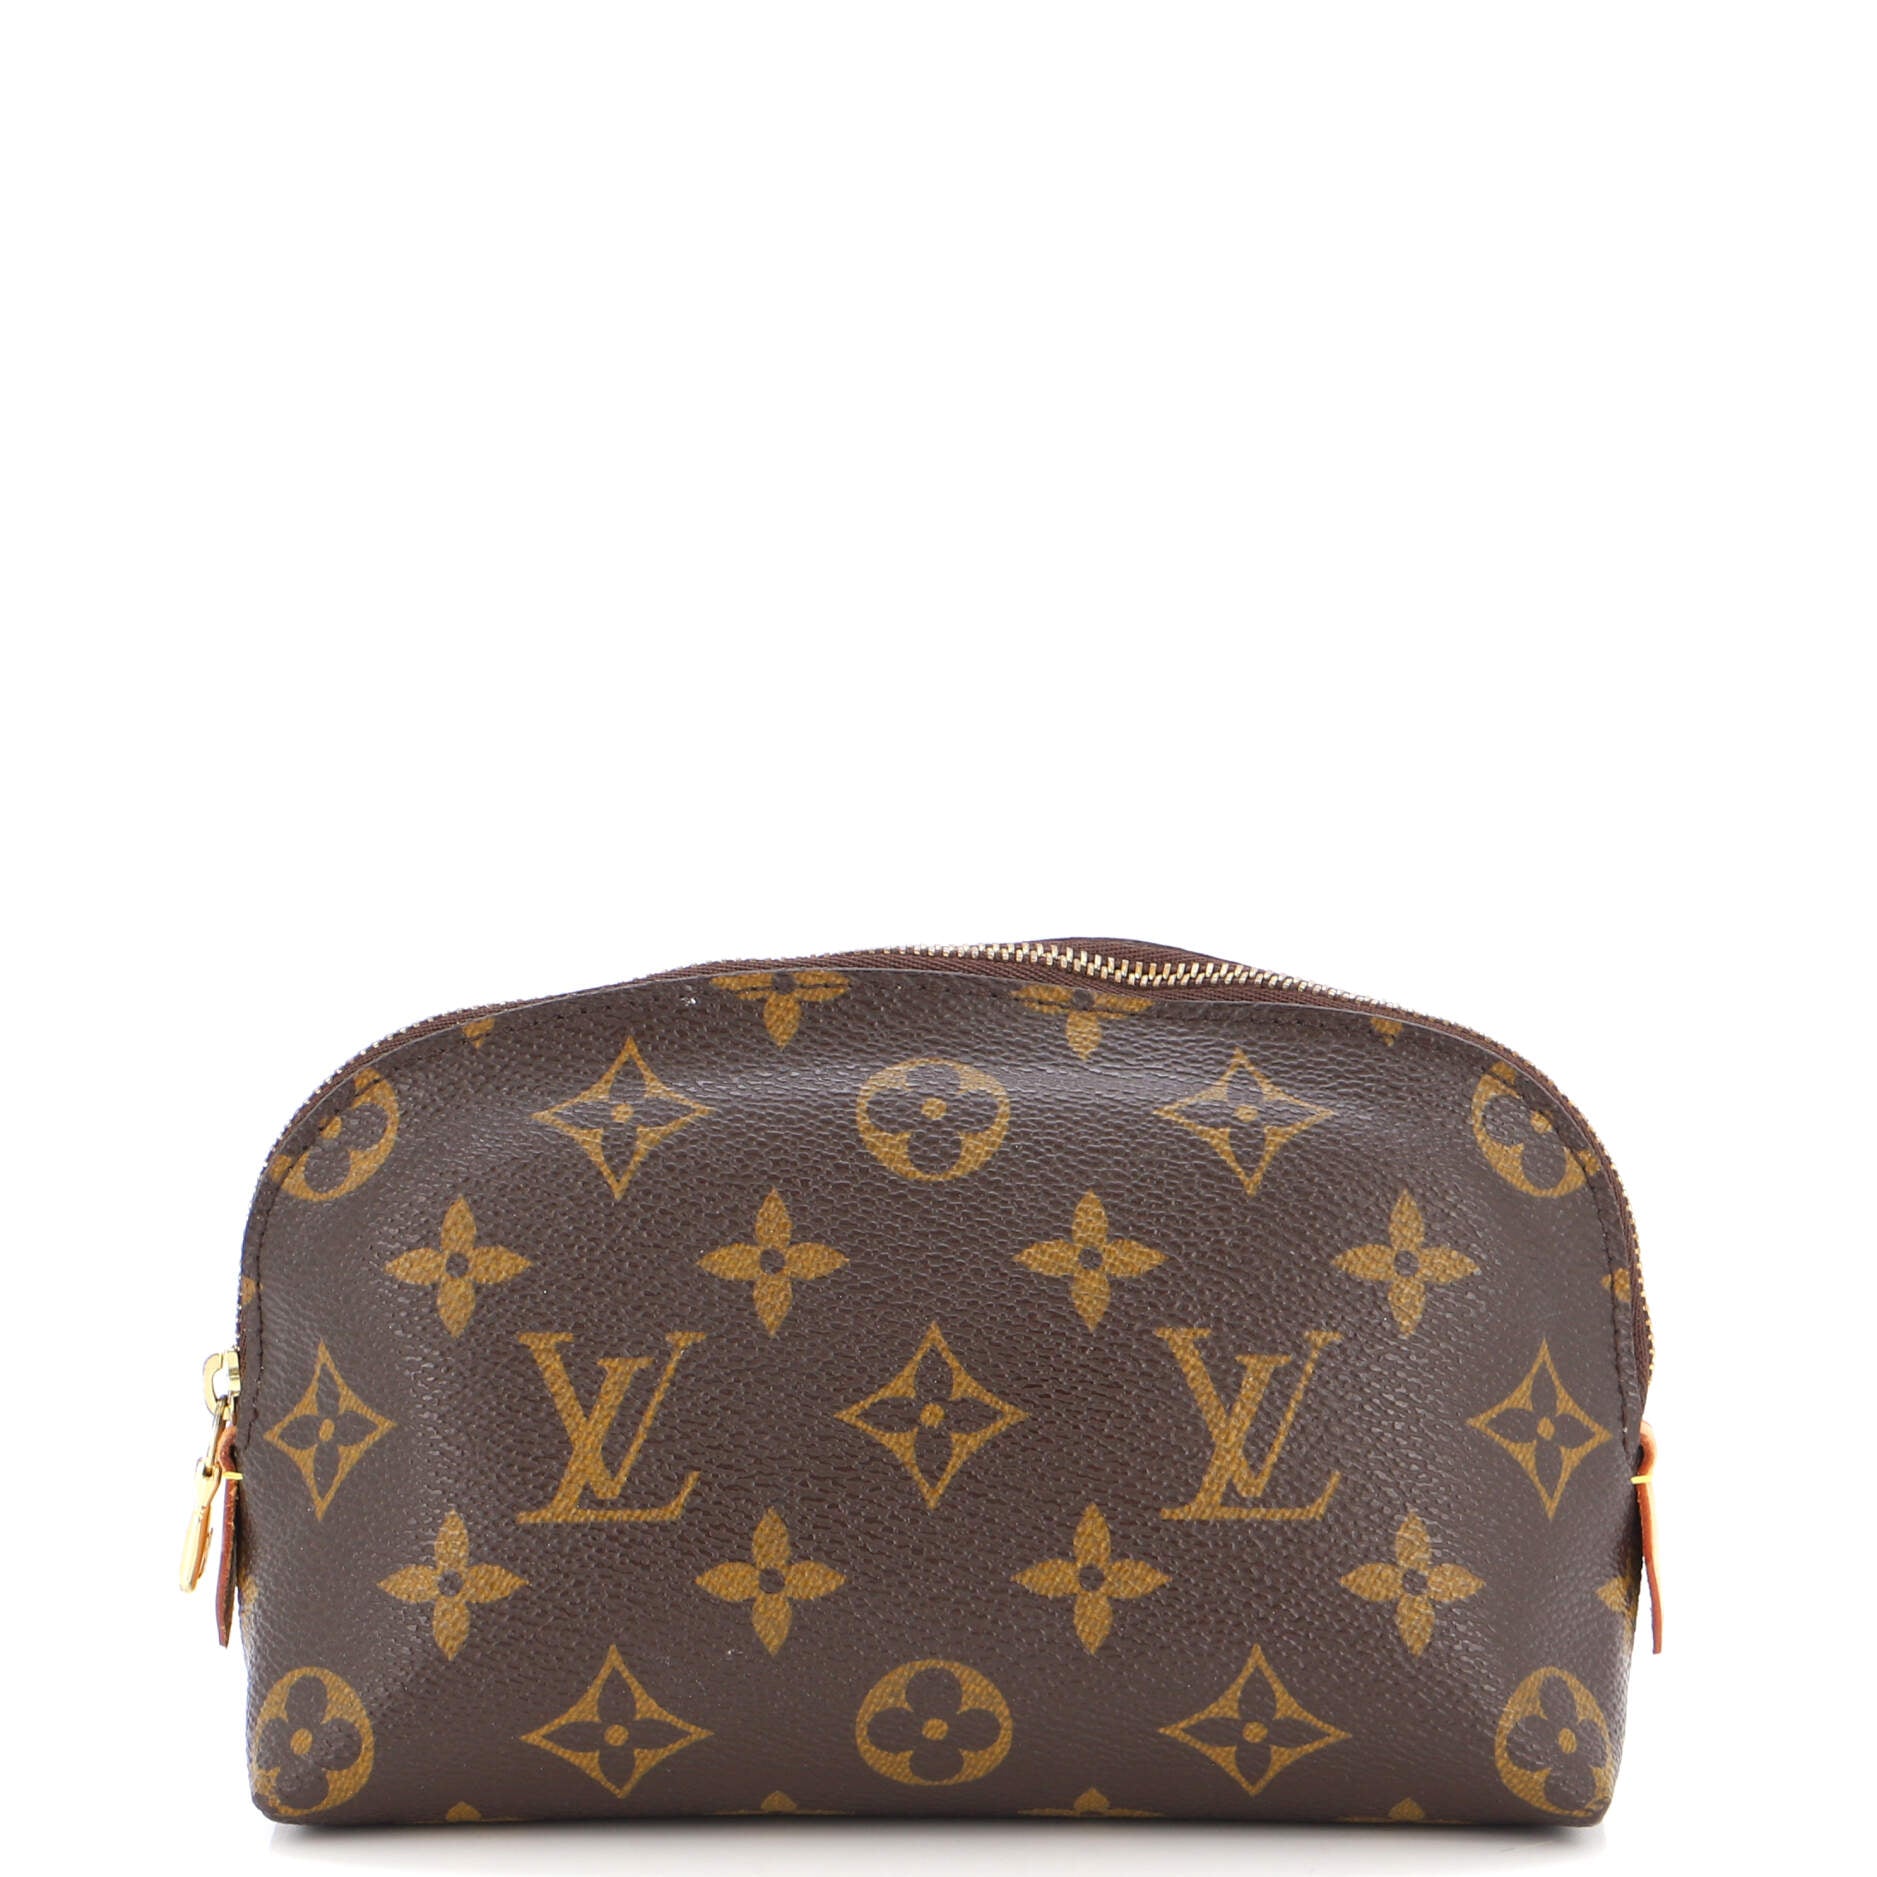 Louis Vuitton Men's Flap Pocket Hooded Jacket Monogram Denim Brown 2339531